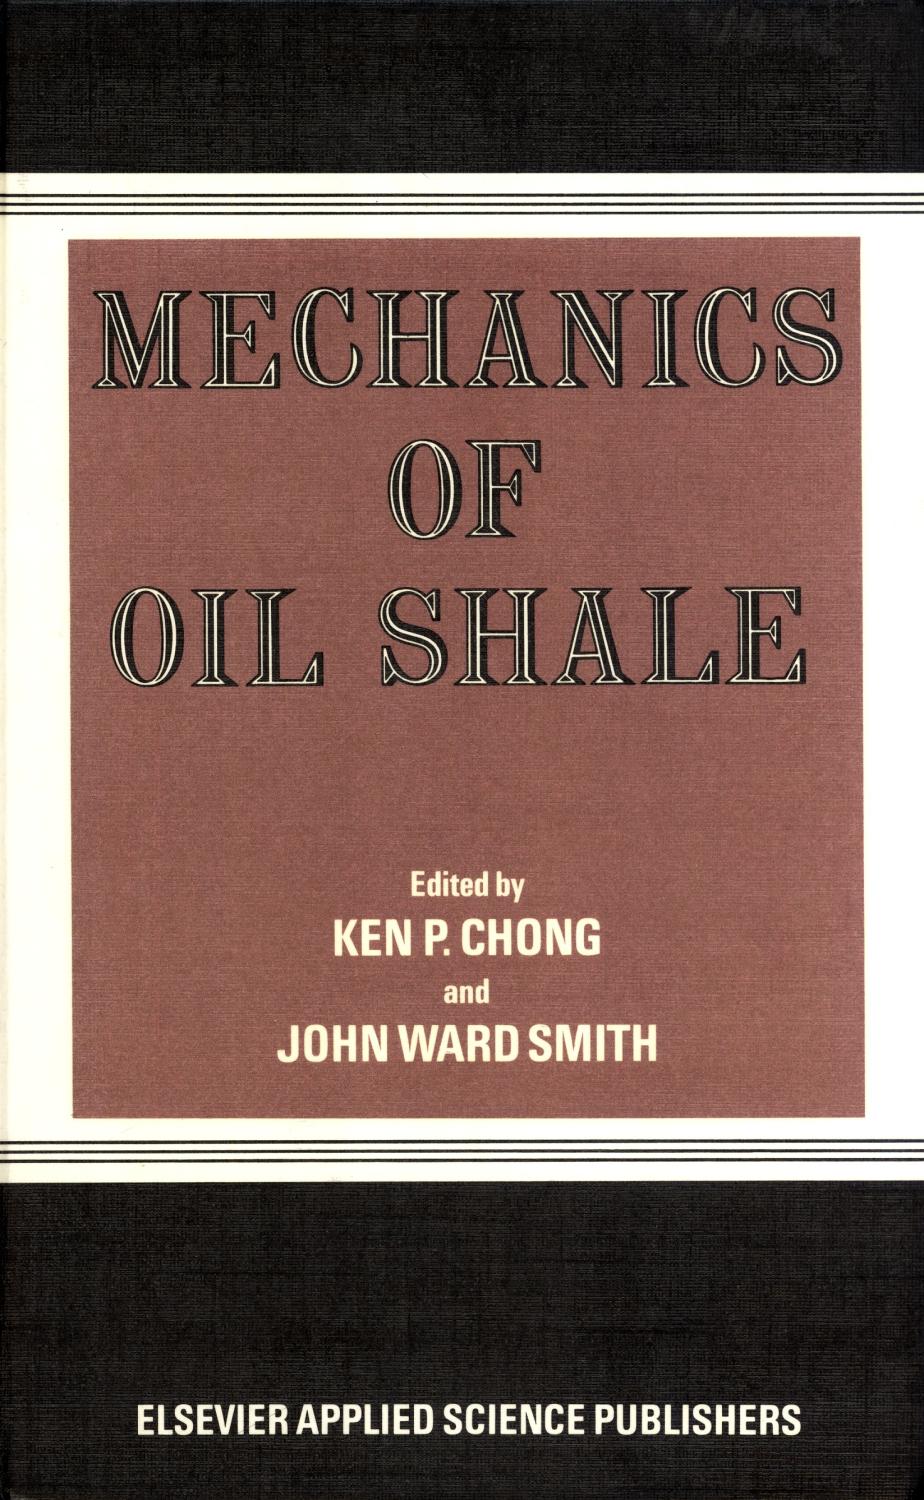 Mechanics of Oil Shale - Chong, Ken P. and Smith, John Ward (editors)